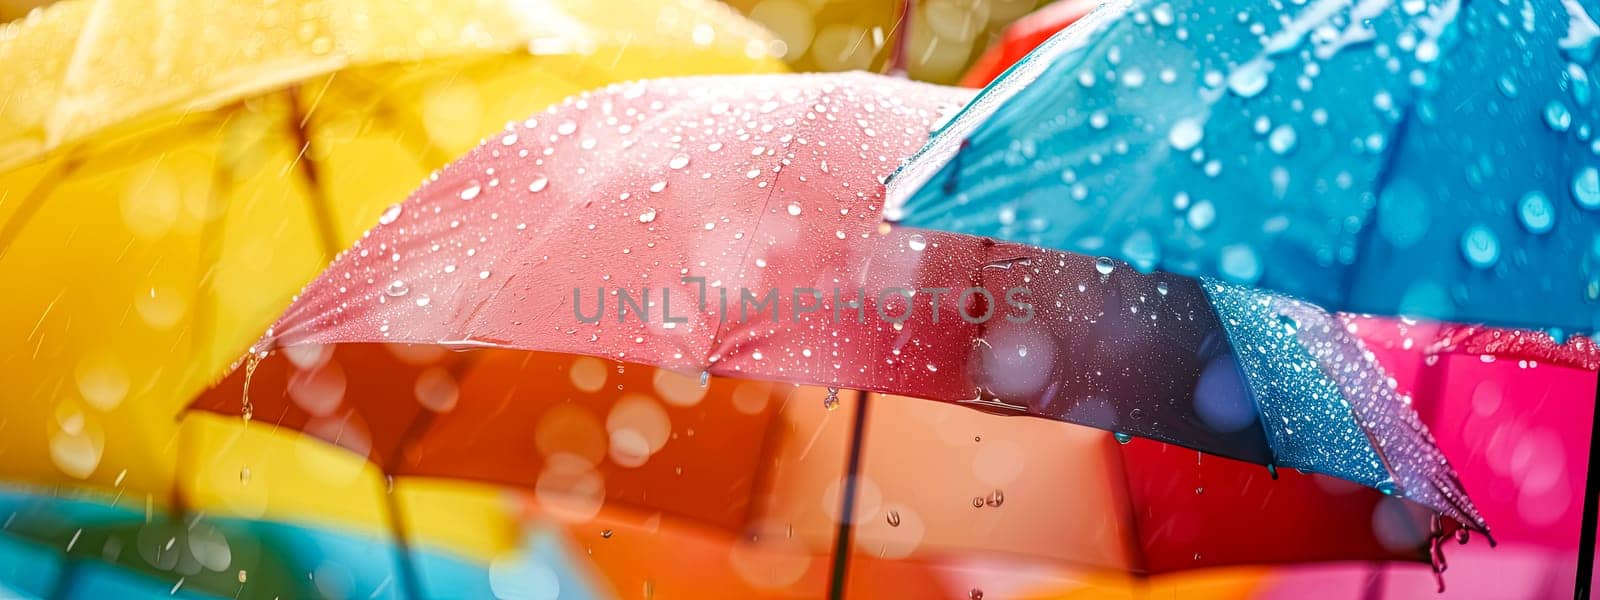 Rainbow Umbrellas with Raindrops, banner